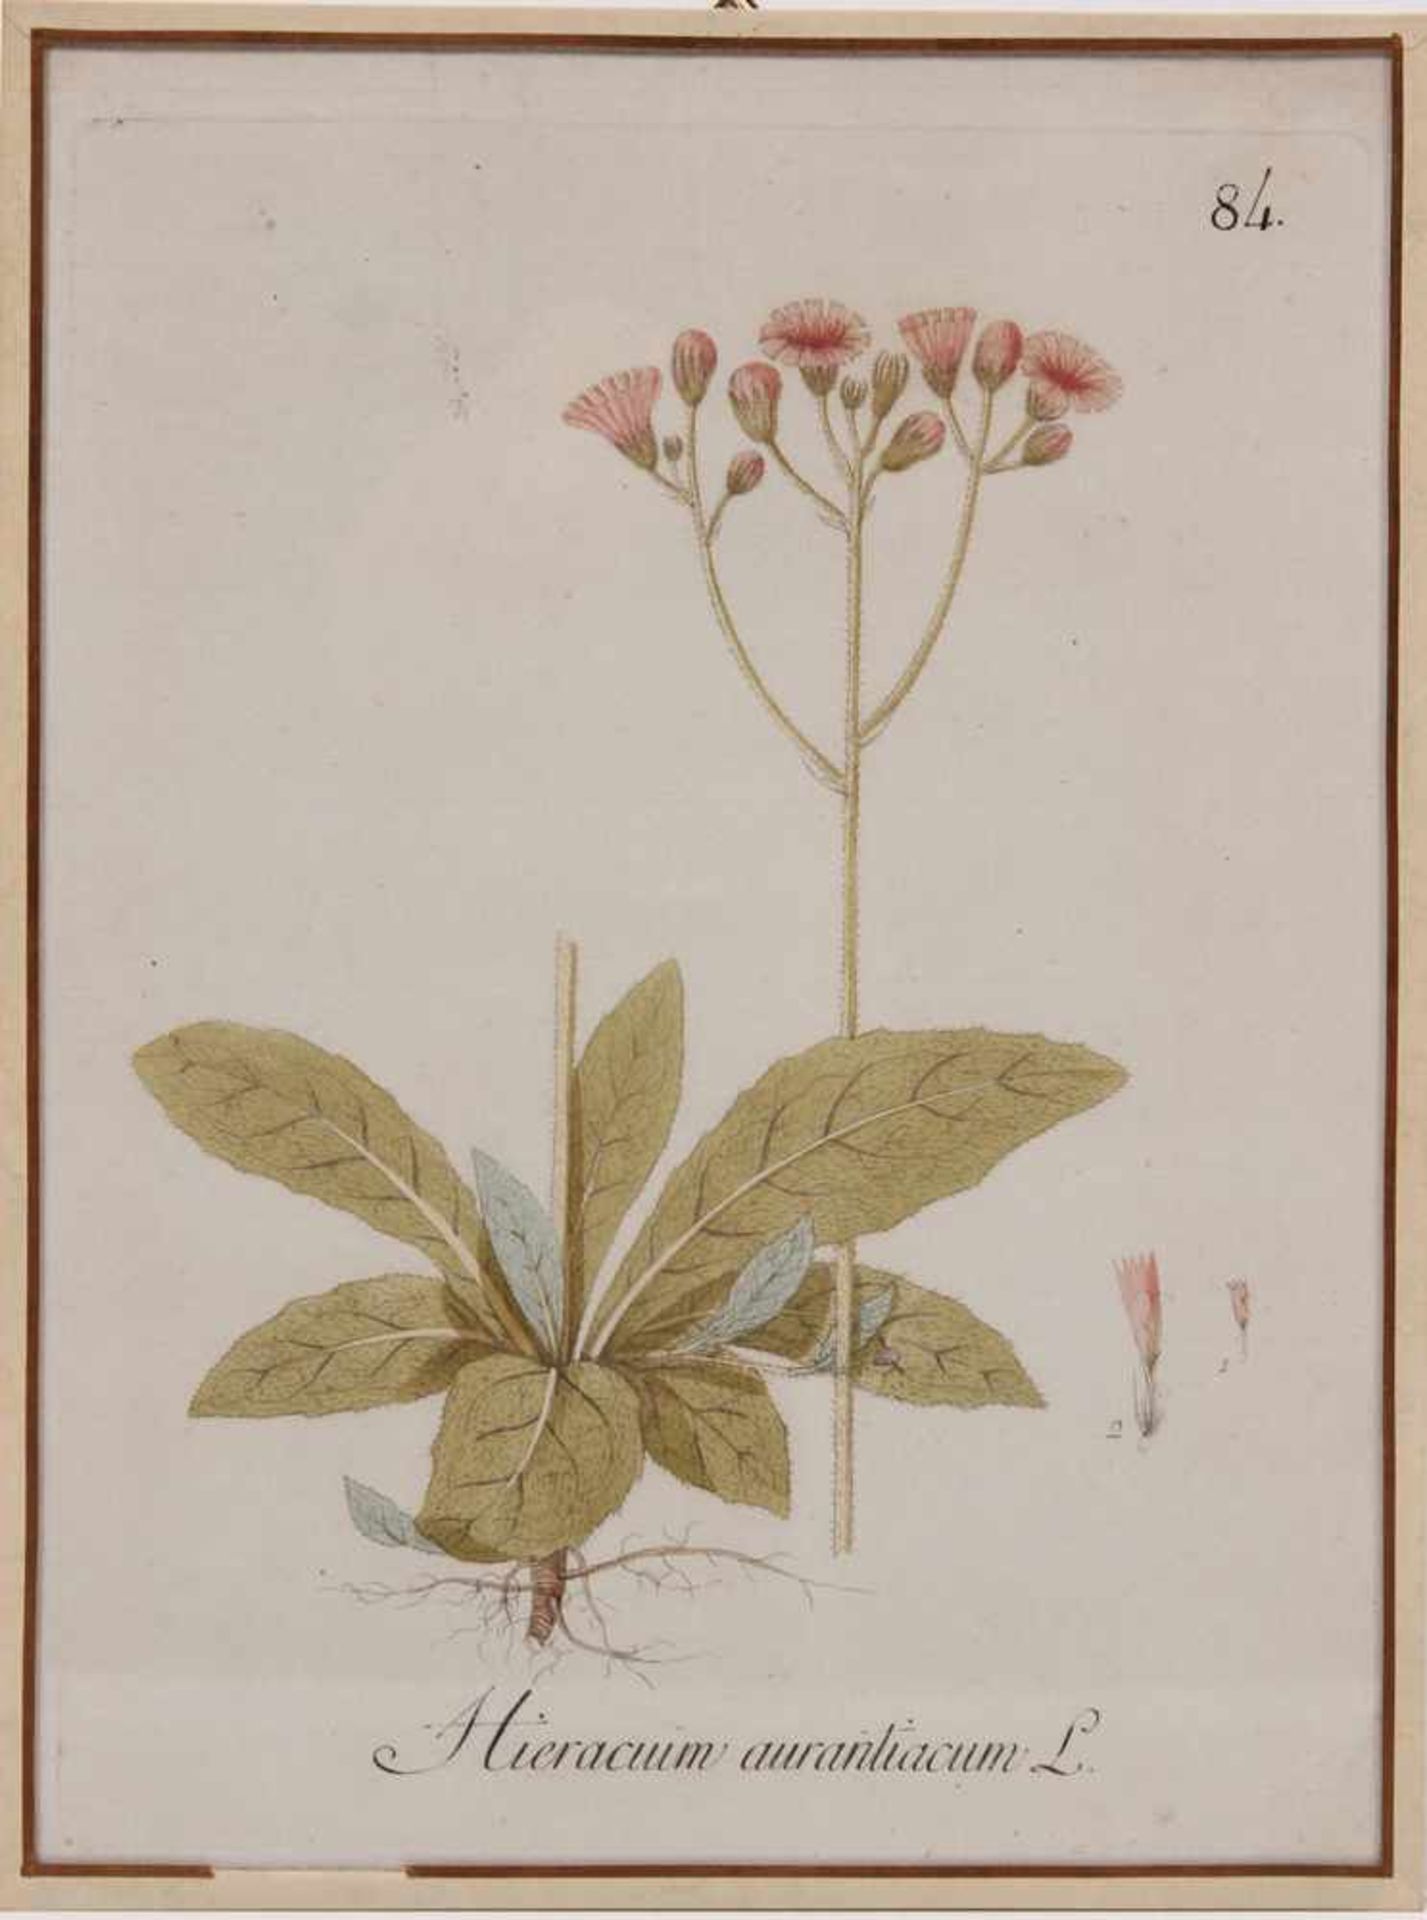 Sieben Kupferstiche.18. Jh. Koloriert. Coronilla emerus, Coronilla varia, Hieracuim aurrantiacum, - Bild 3 aus 7